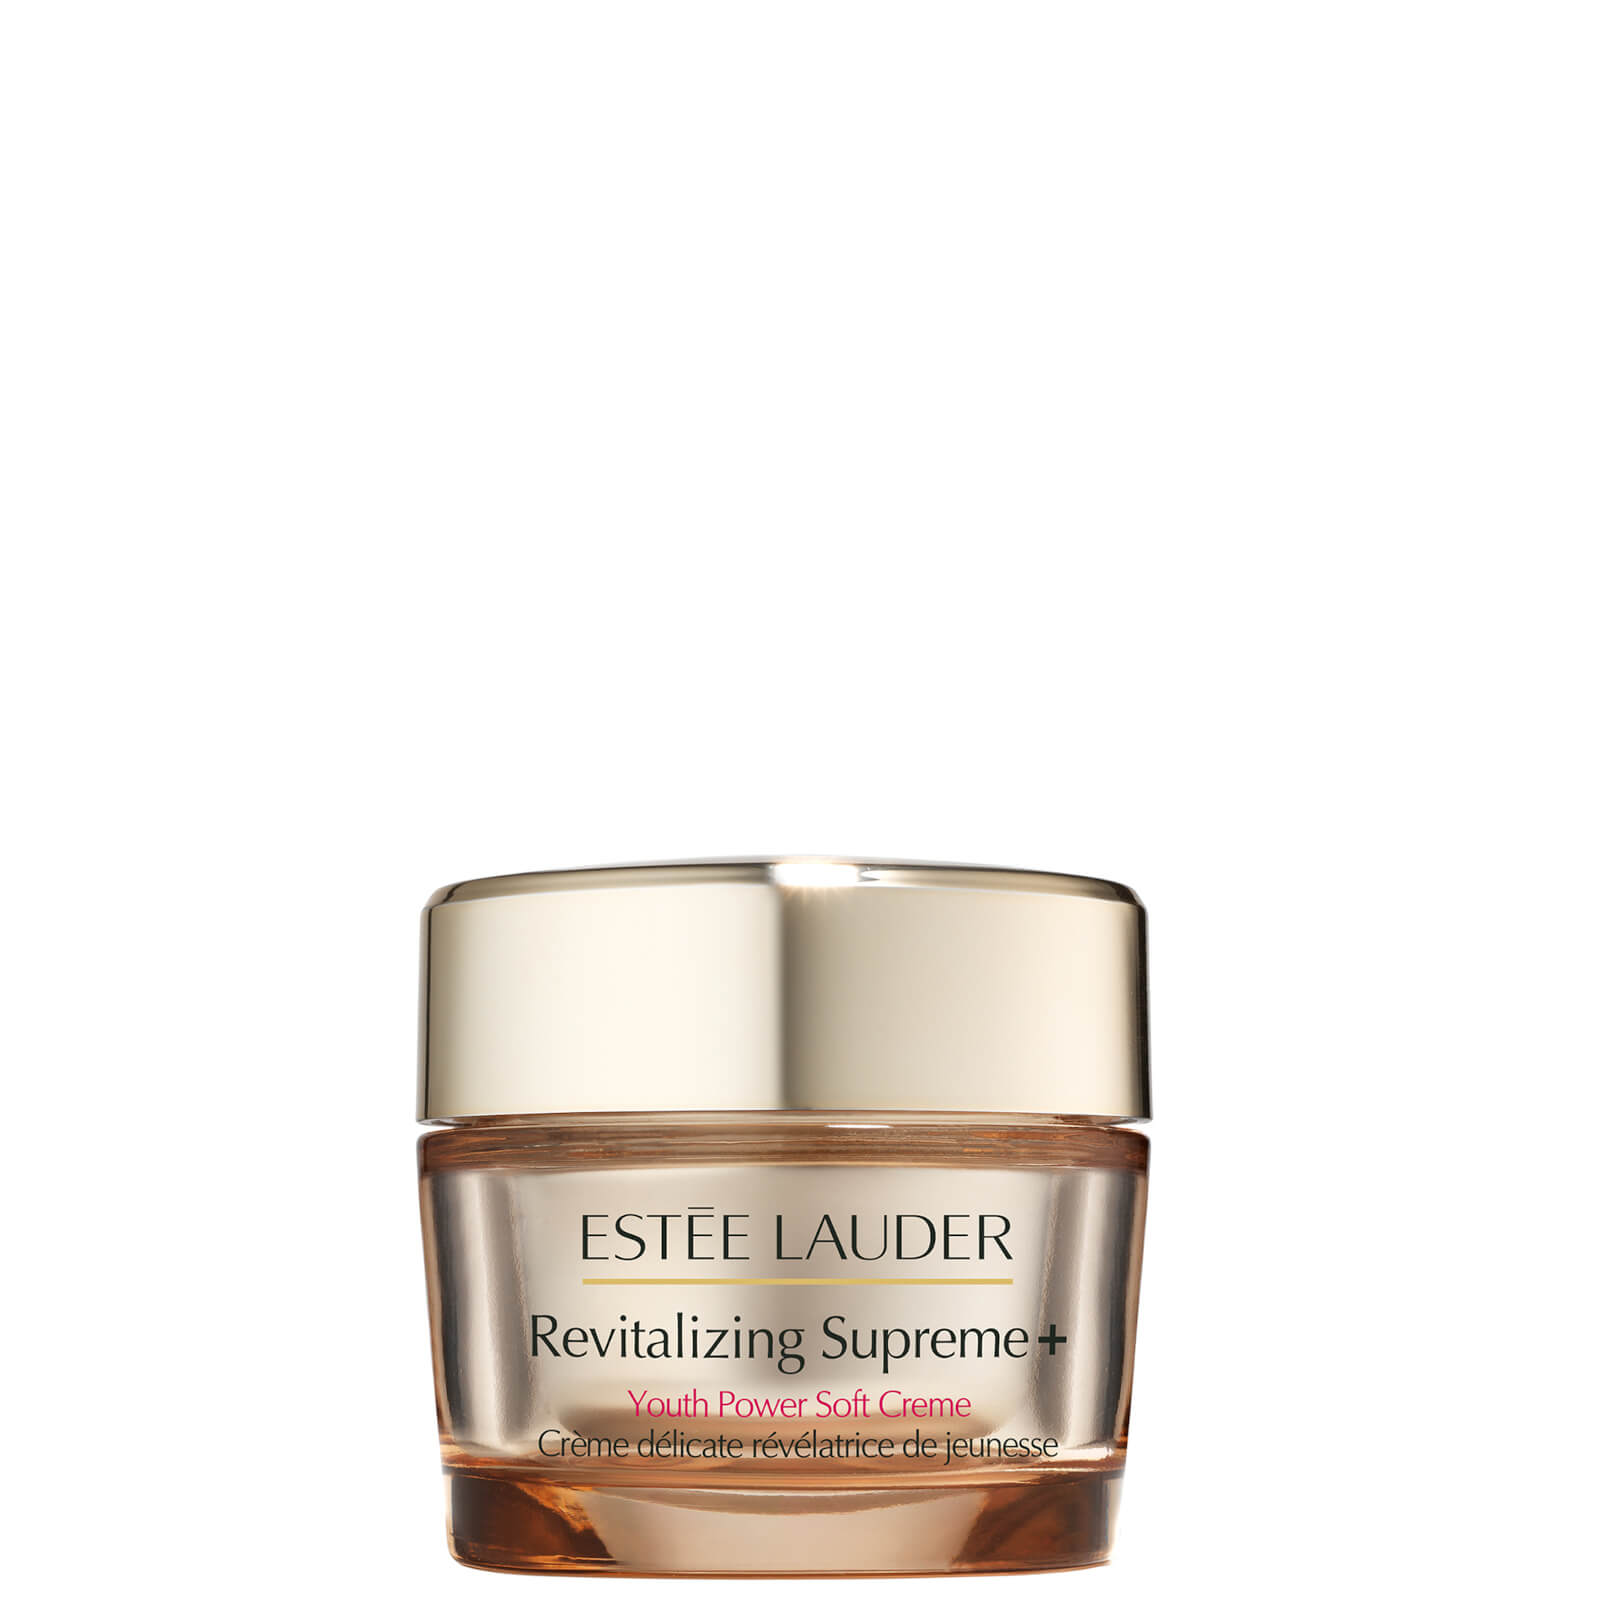 Image of Estee Lauder Revitalizing Supreme+ Youth Power Soft Creme 30 ml